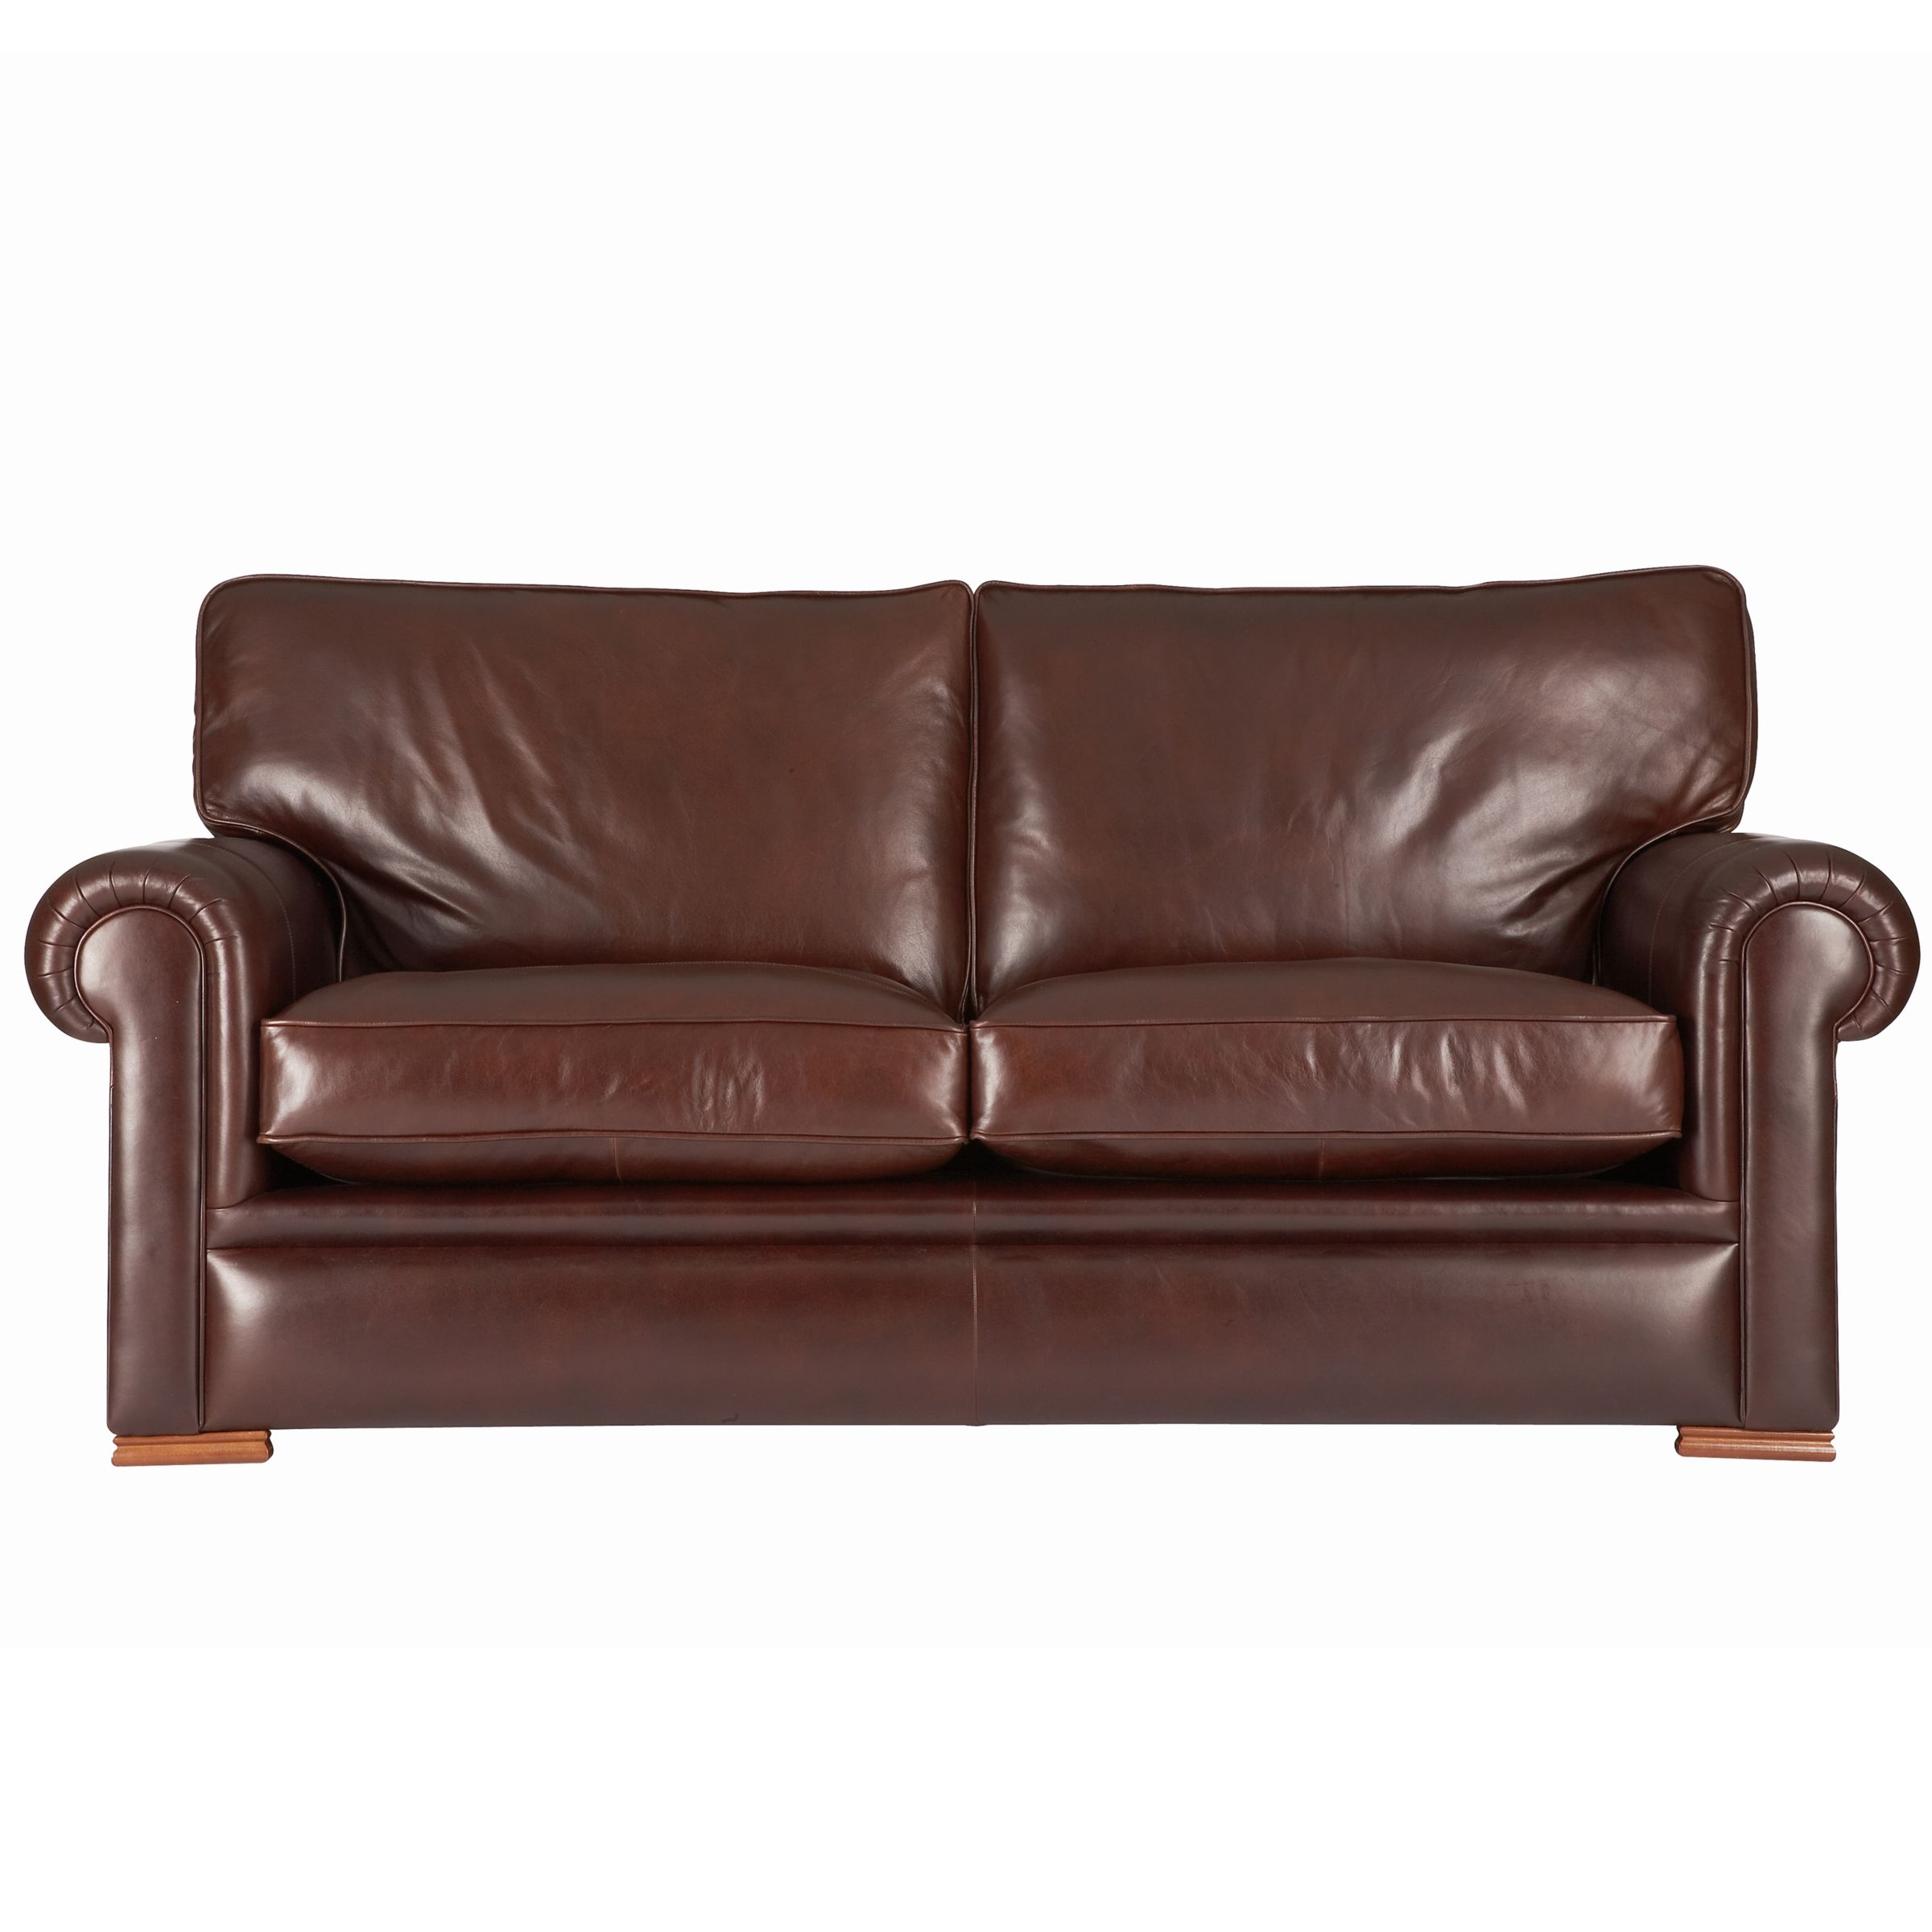 John Lewis Romsey Large Leather Sofa, Murano at JohnLewis